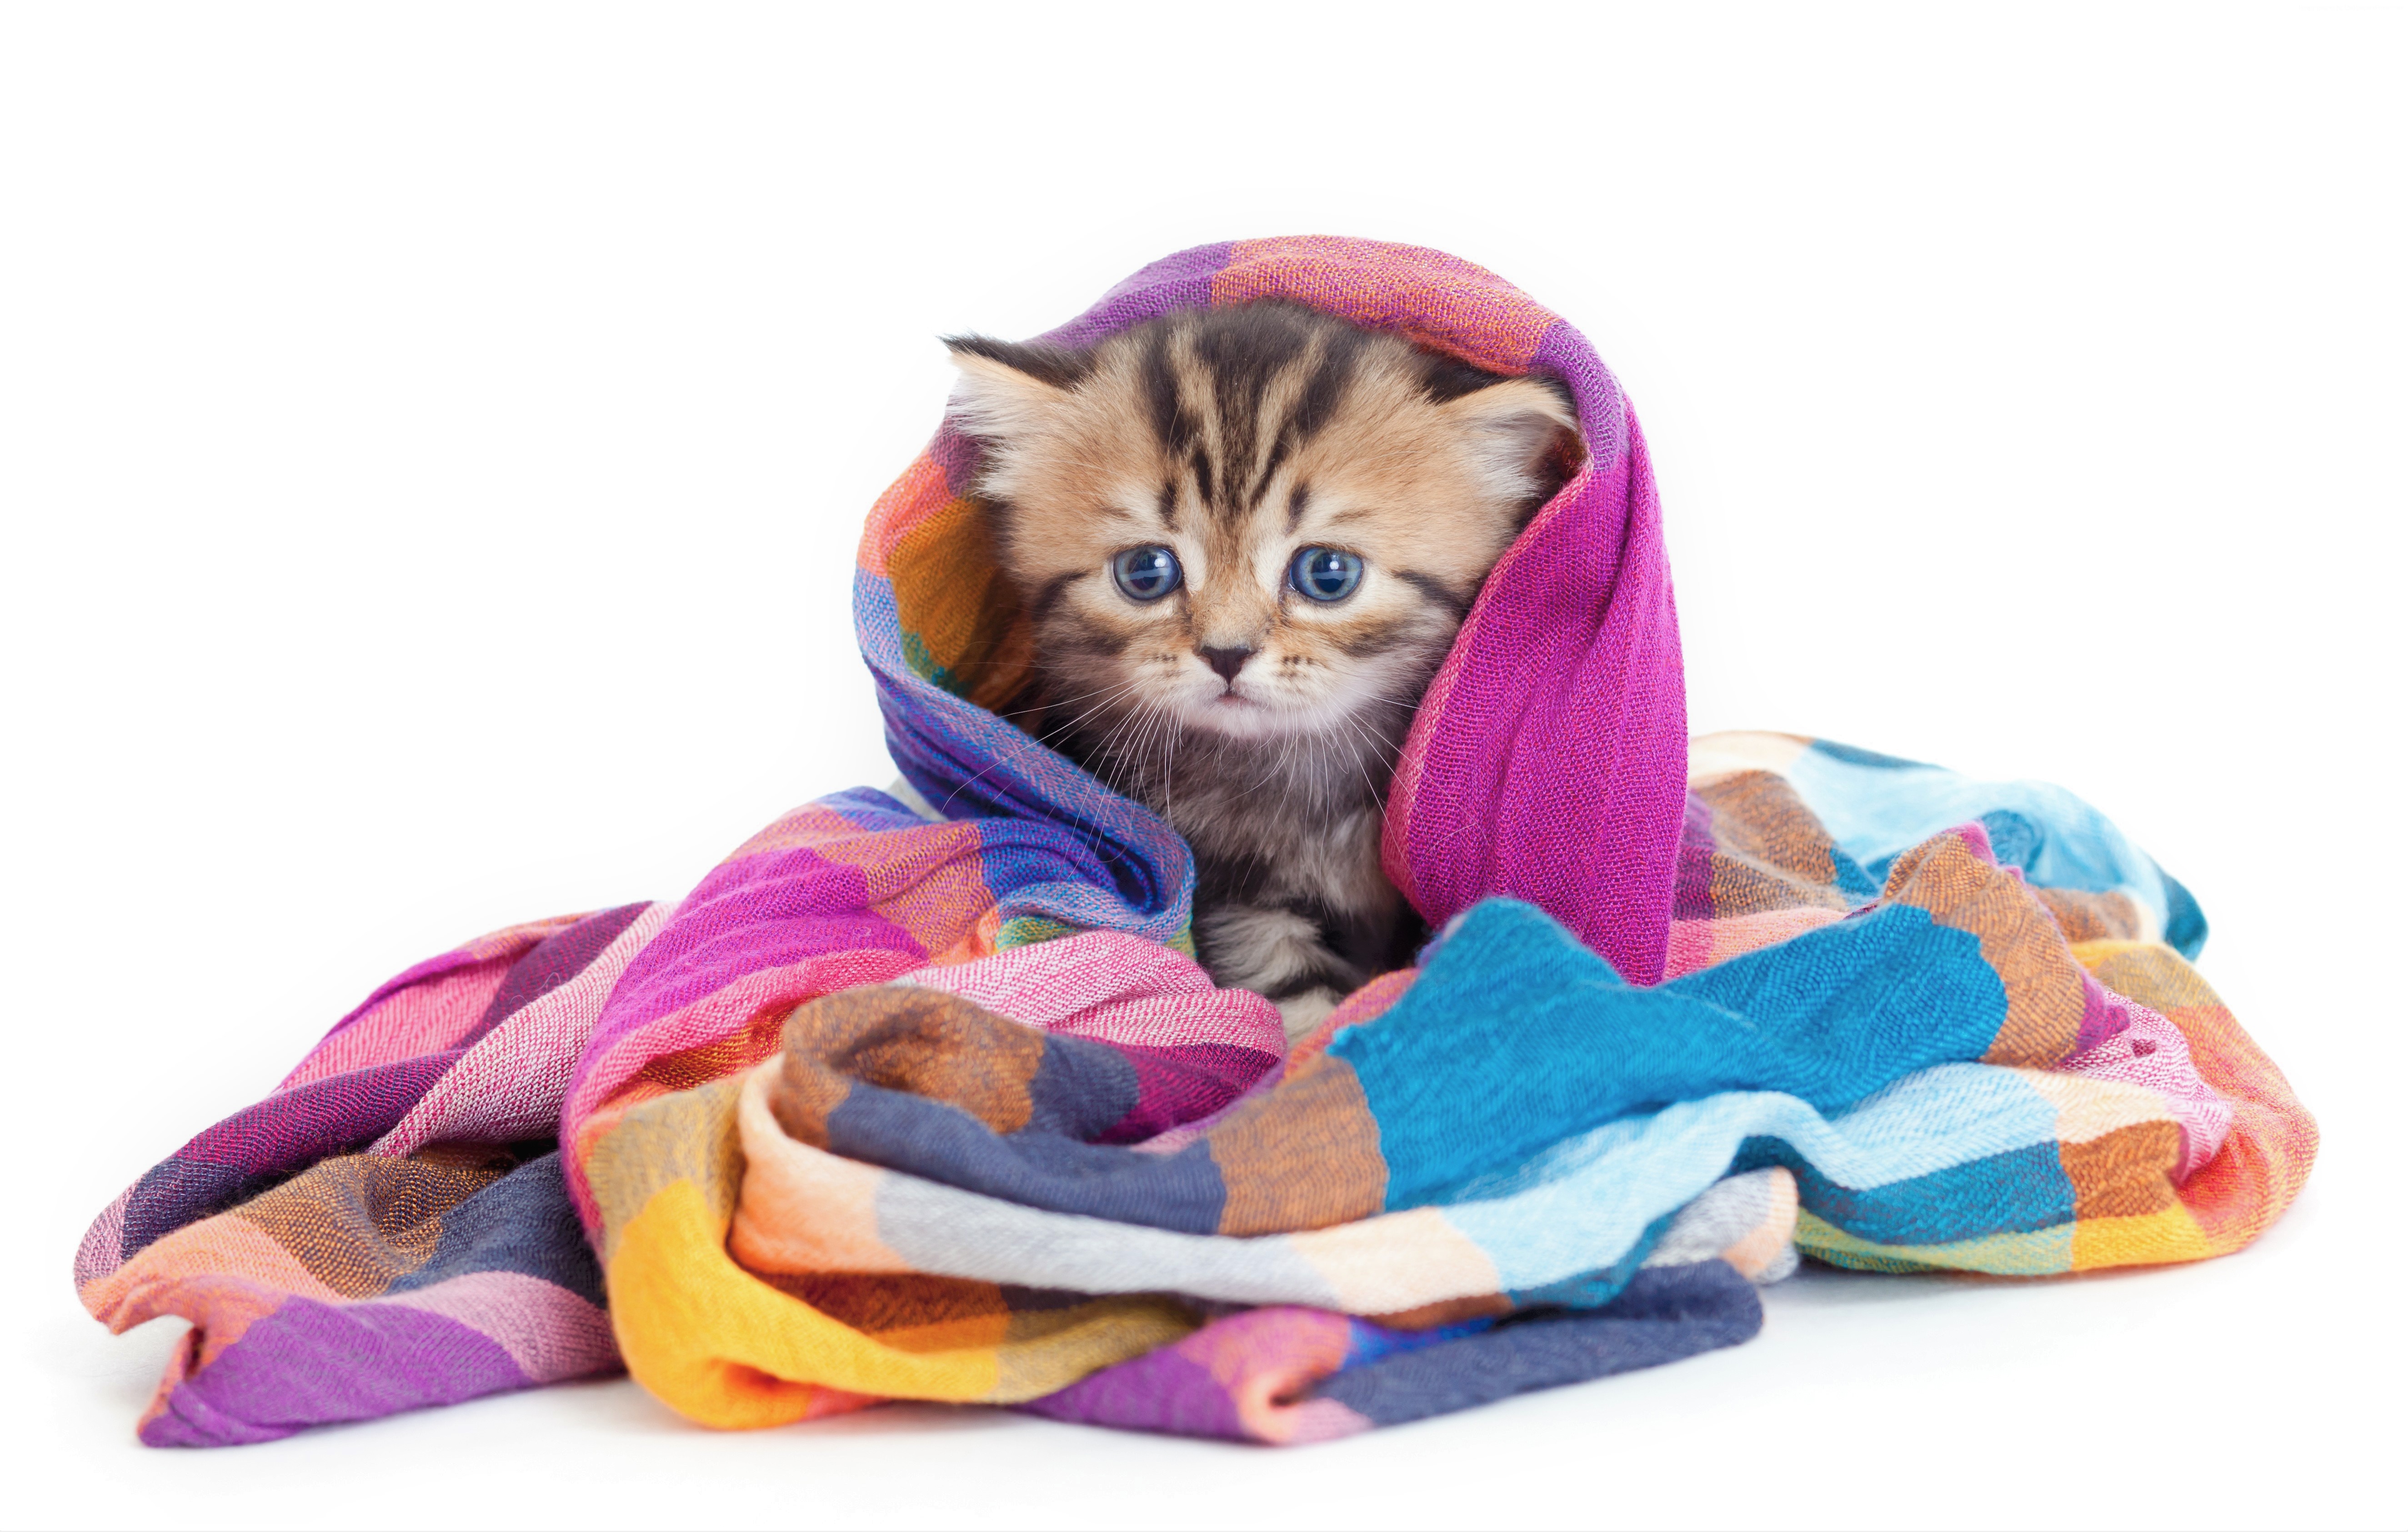 Animal Baby Animal Blanket Cat Colorful Cute Kitten 5297x3370